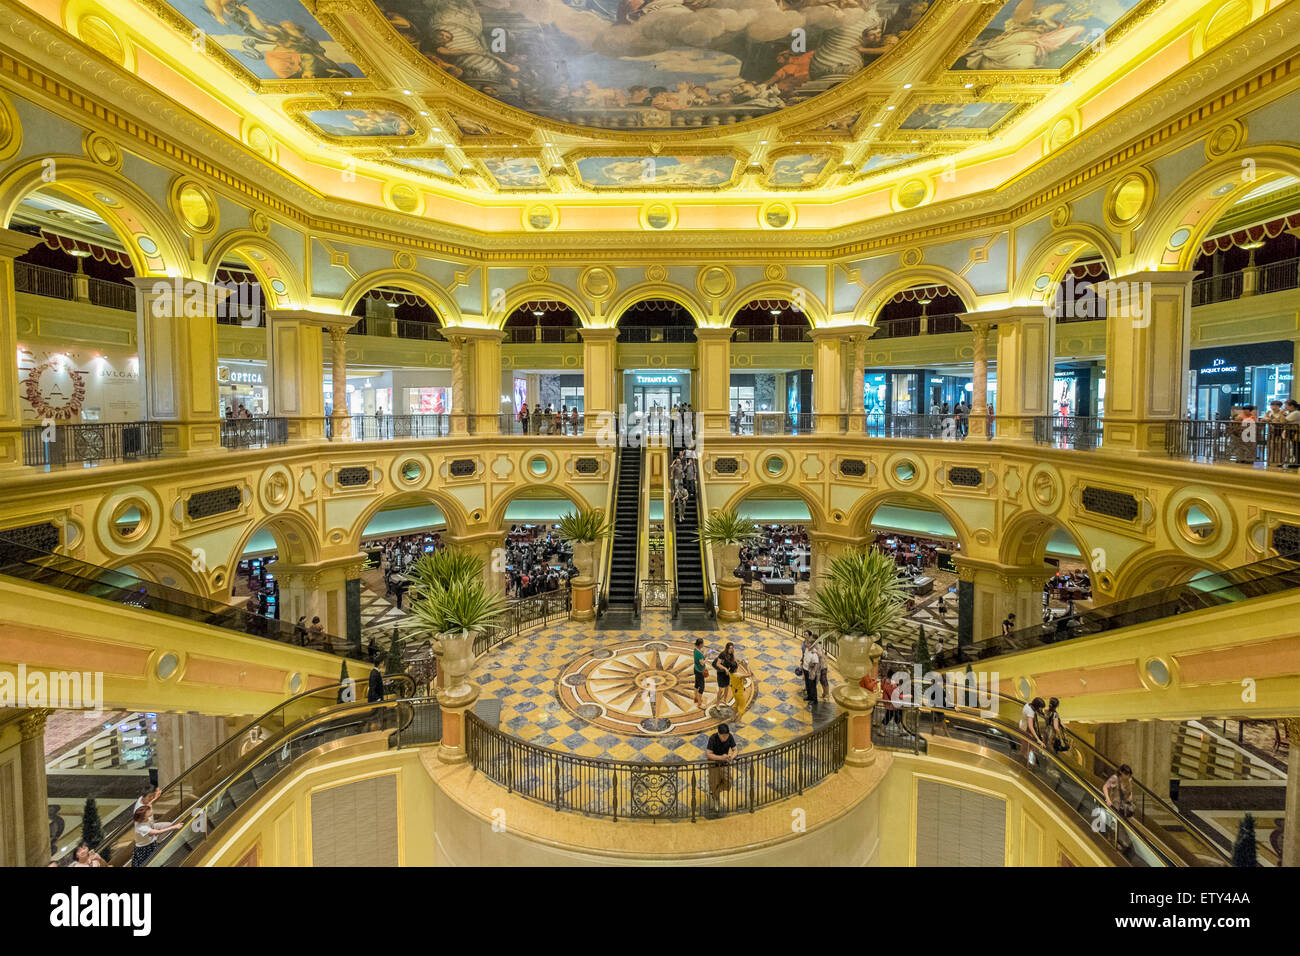 Ornate interior of The Venetian Macao casino and hotel in Macau China Stock Photo